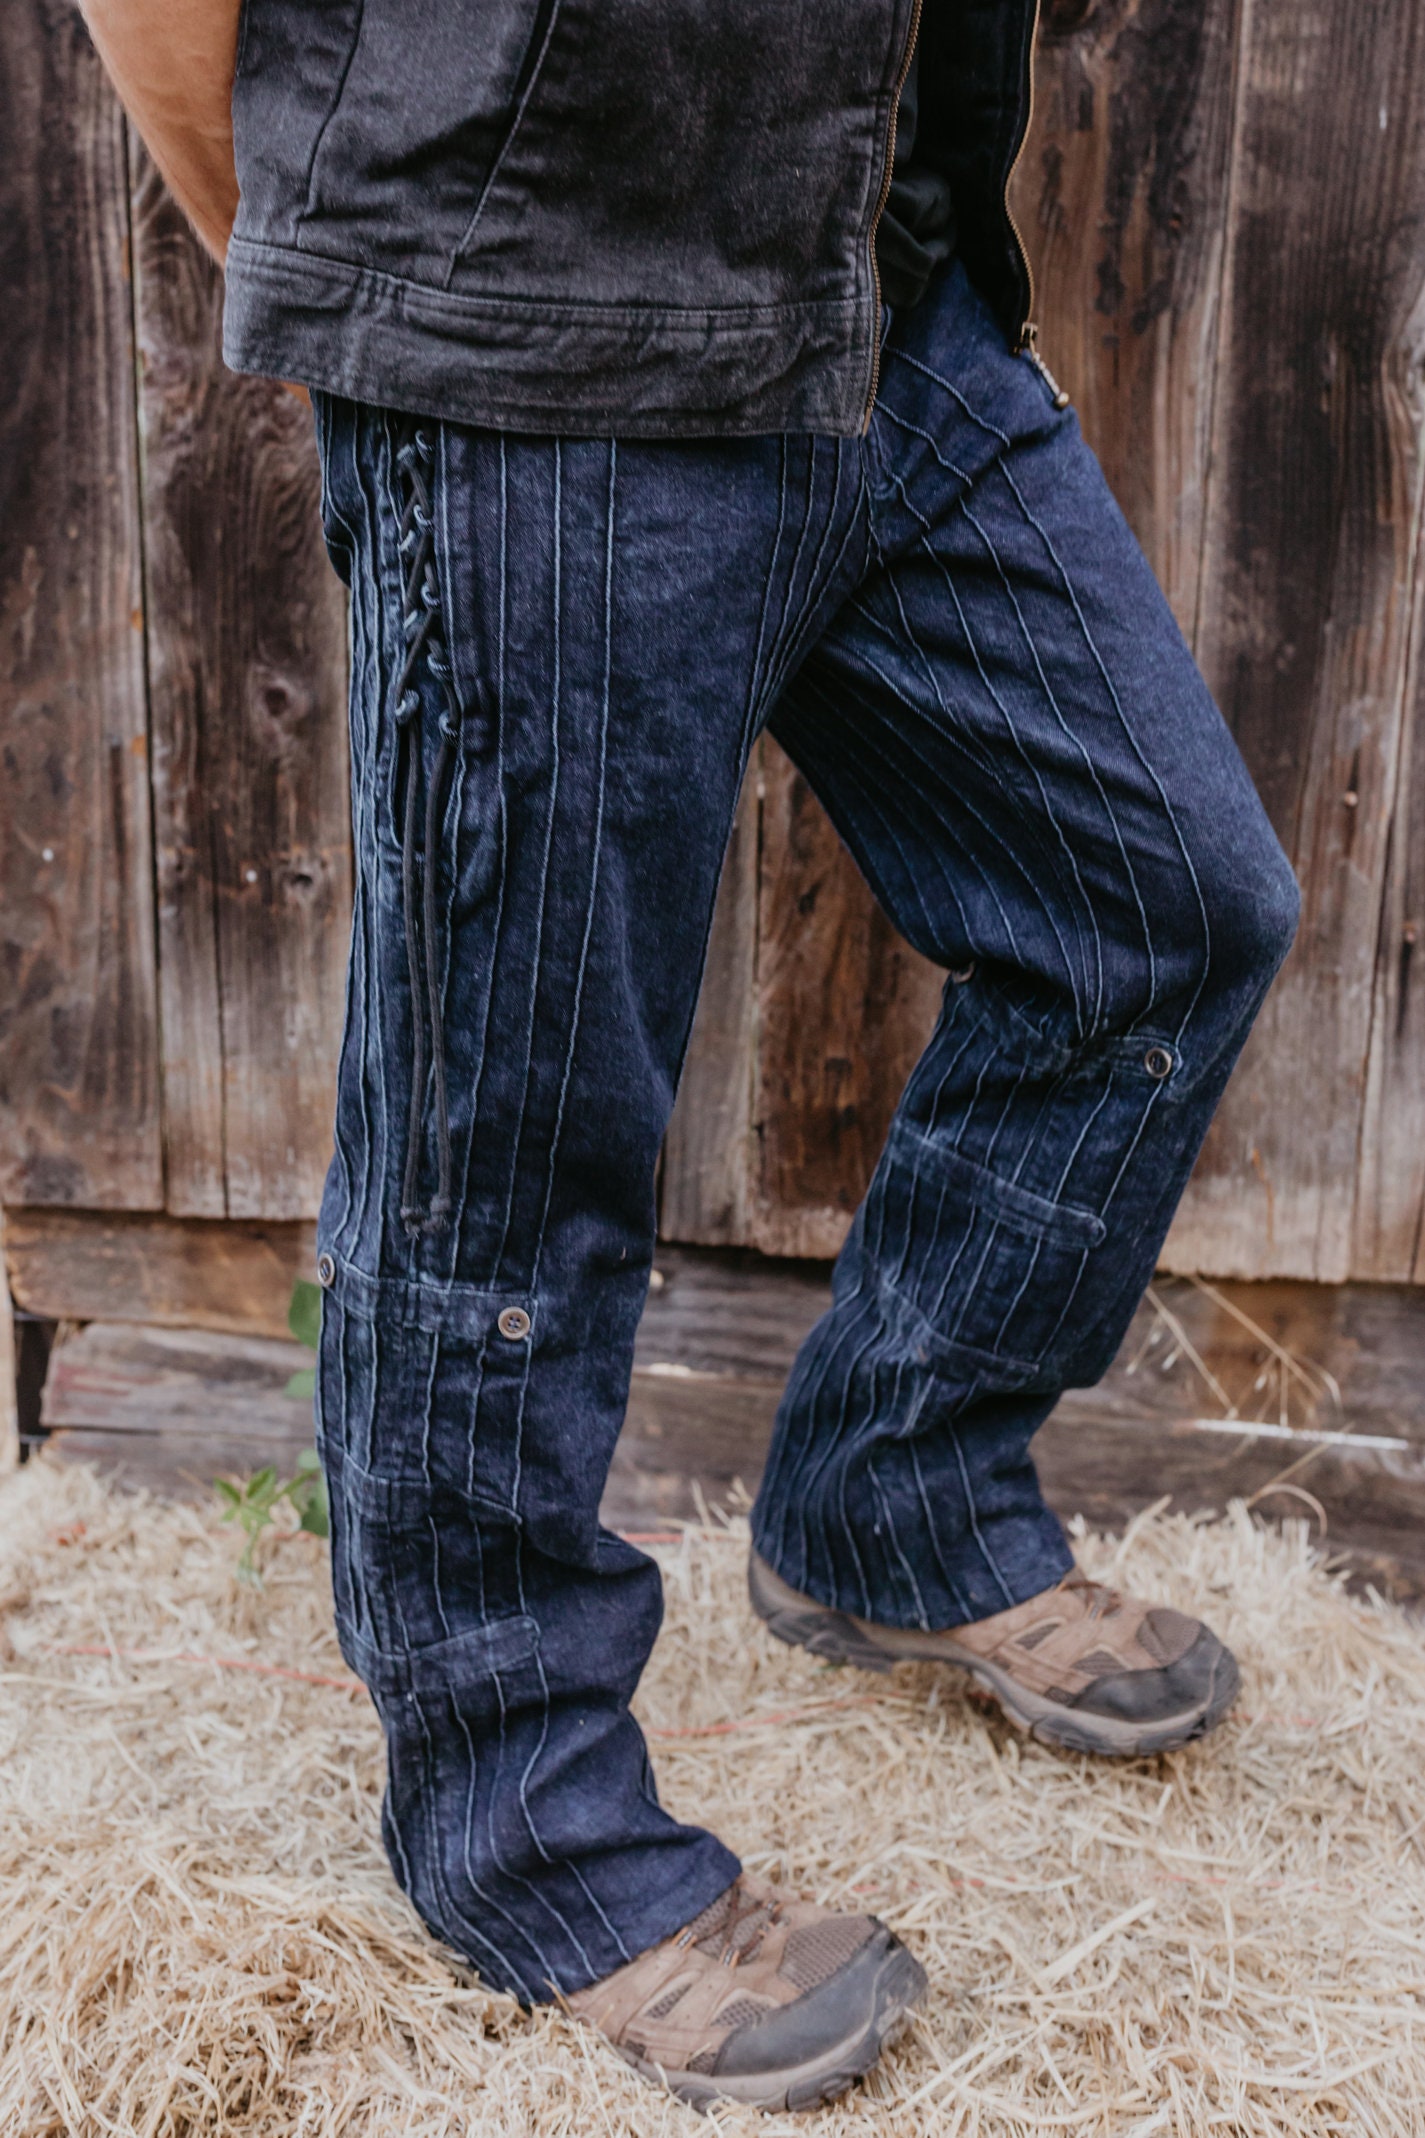 Buy KingSize Mens Big  Tall Expandable Waist Pleated Chino Jeans   Tall4640 Stonewash at Amazonin